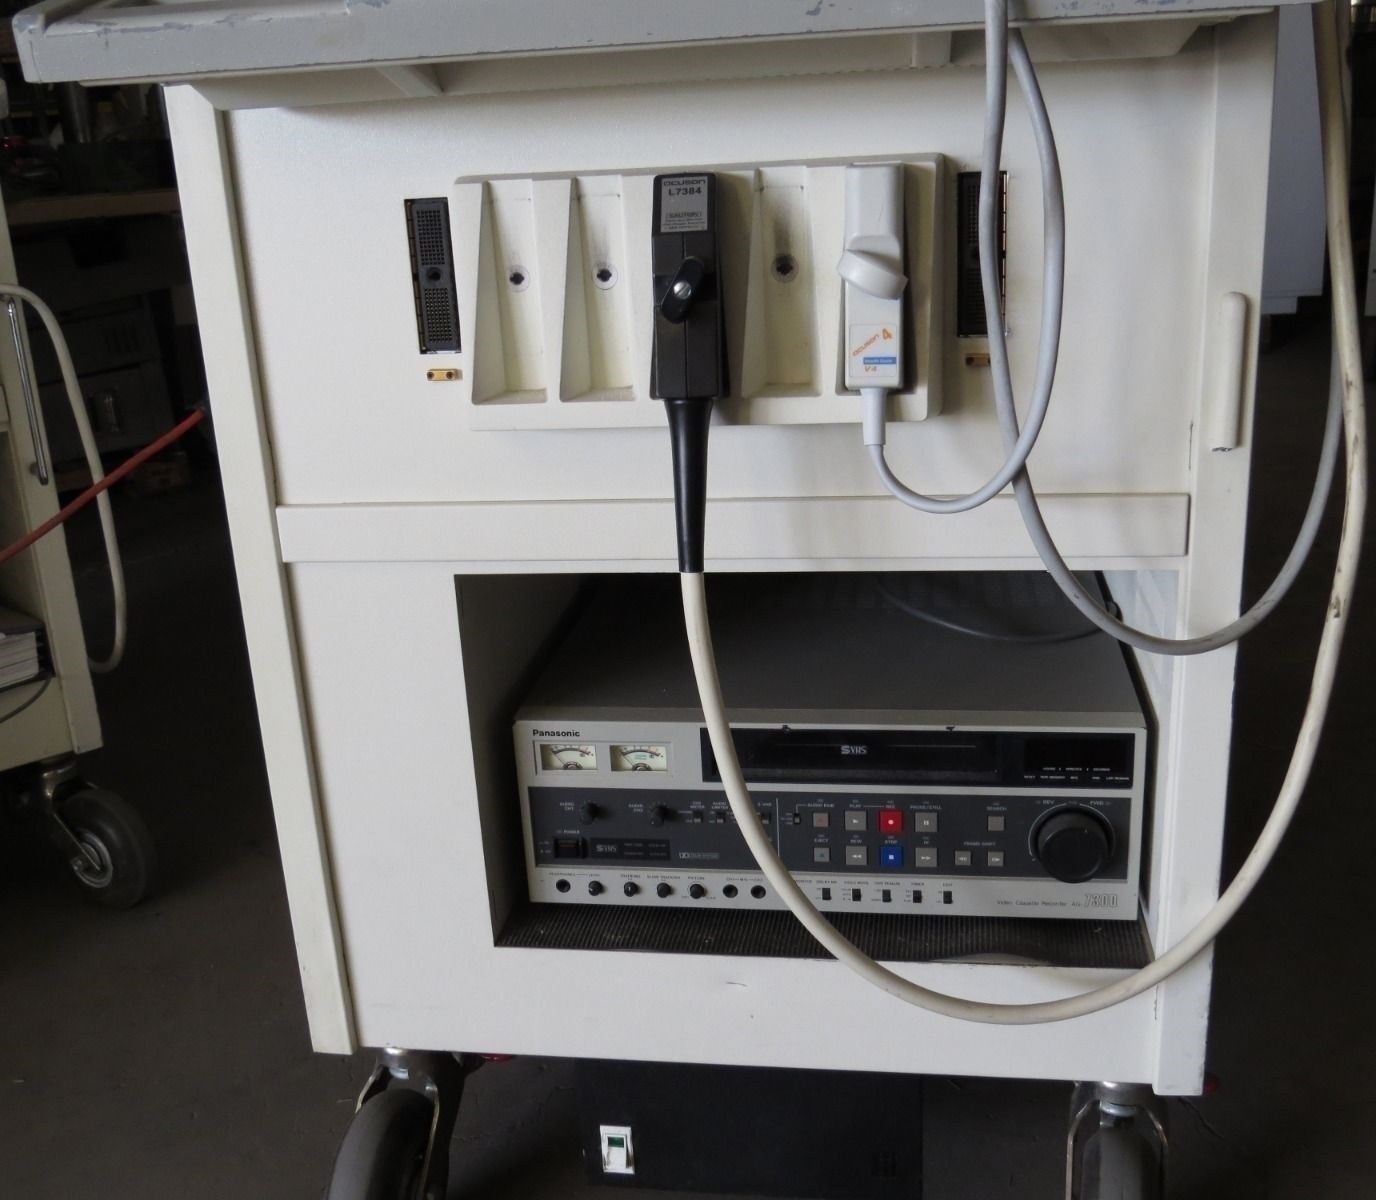 ACUSON 128 Ultrasound SONOGRAPHY Unit (#511) DIAGNOSTIC ULTRASOUND MACHINES FOR SALE